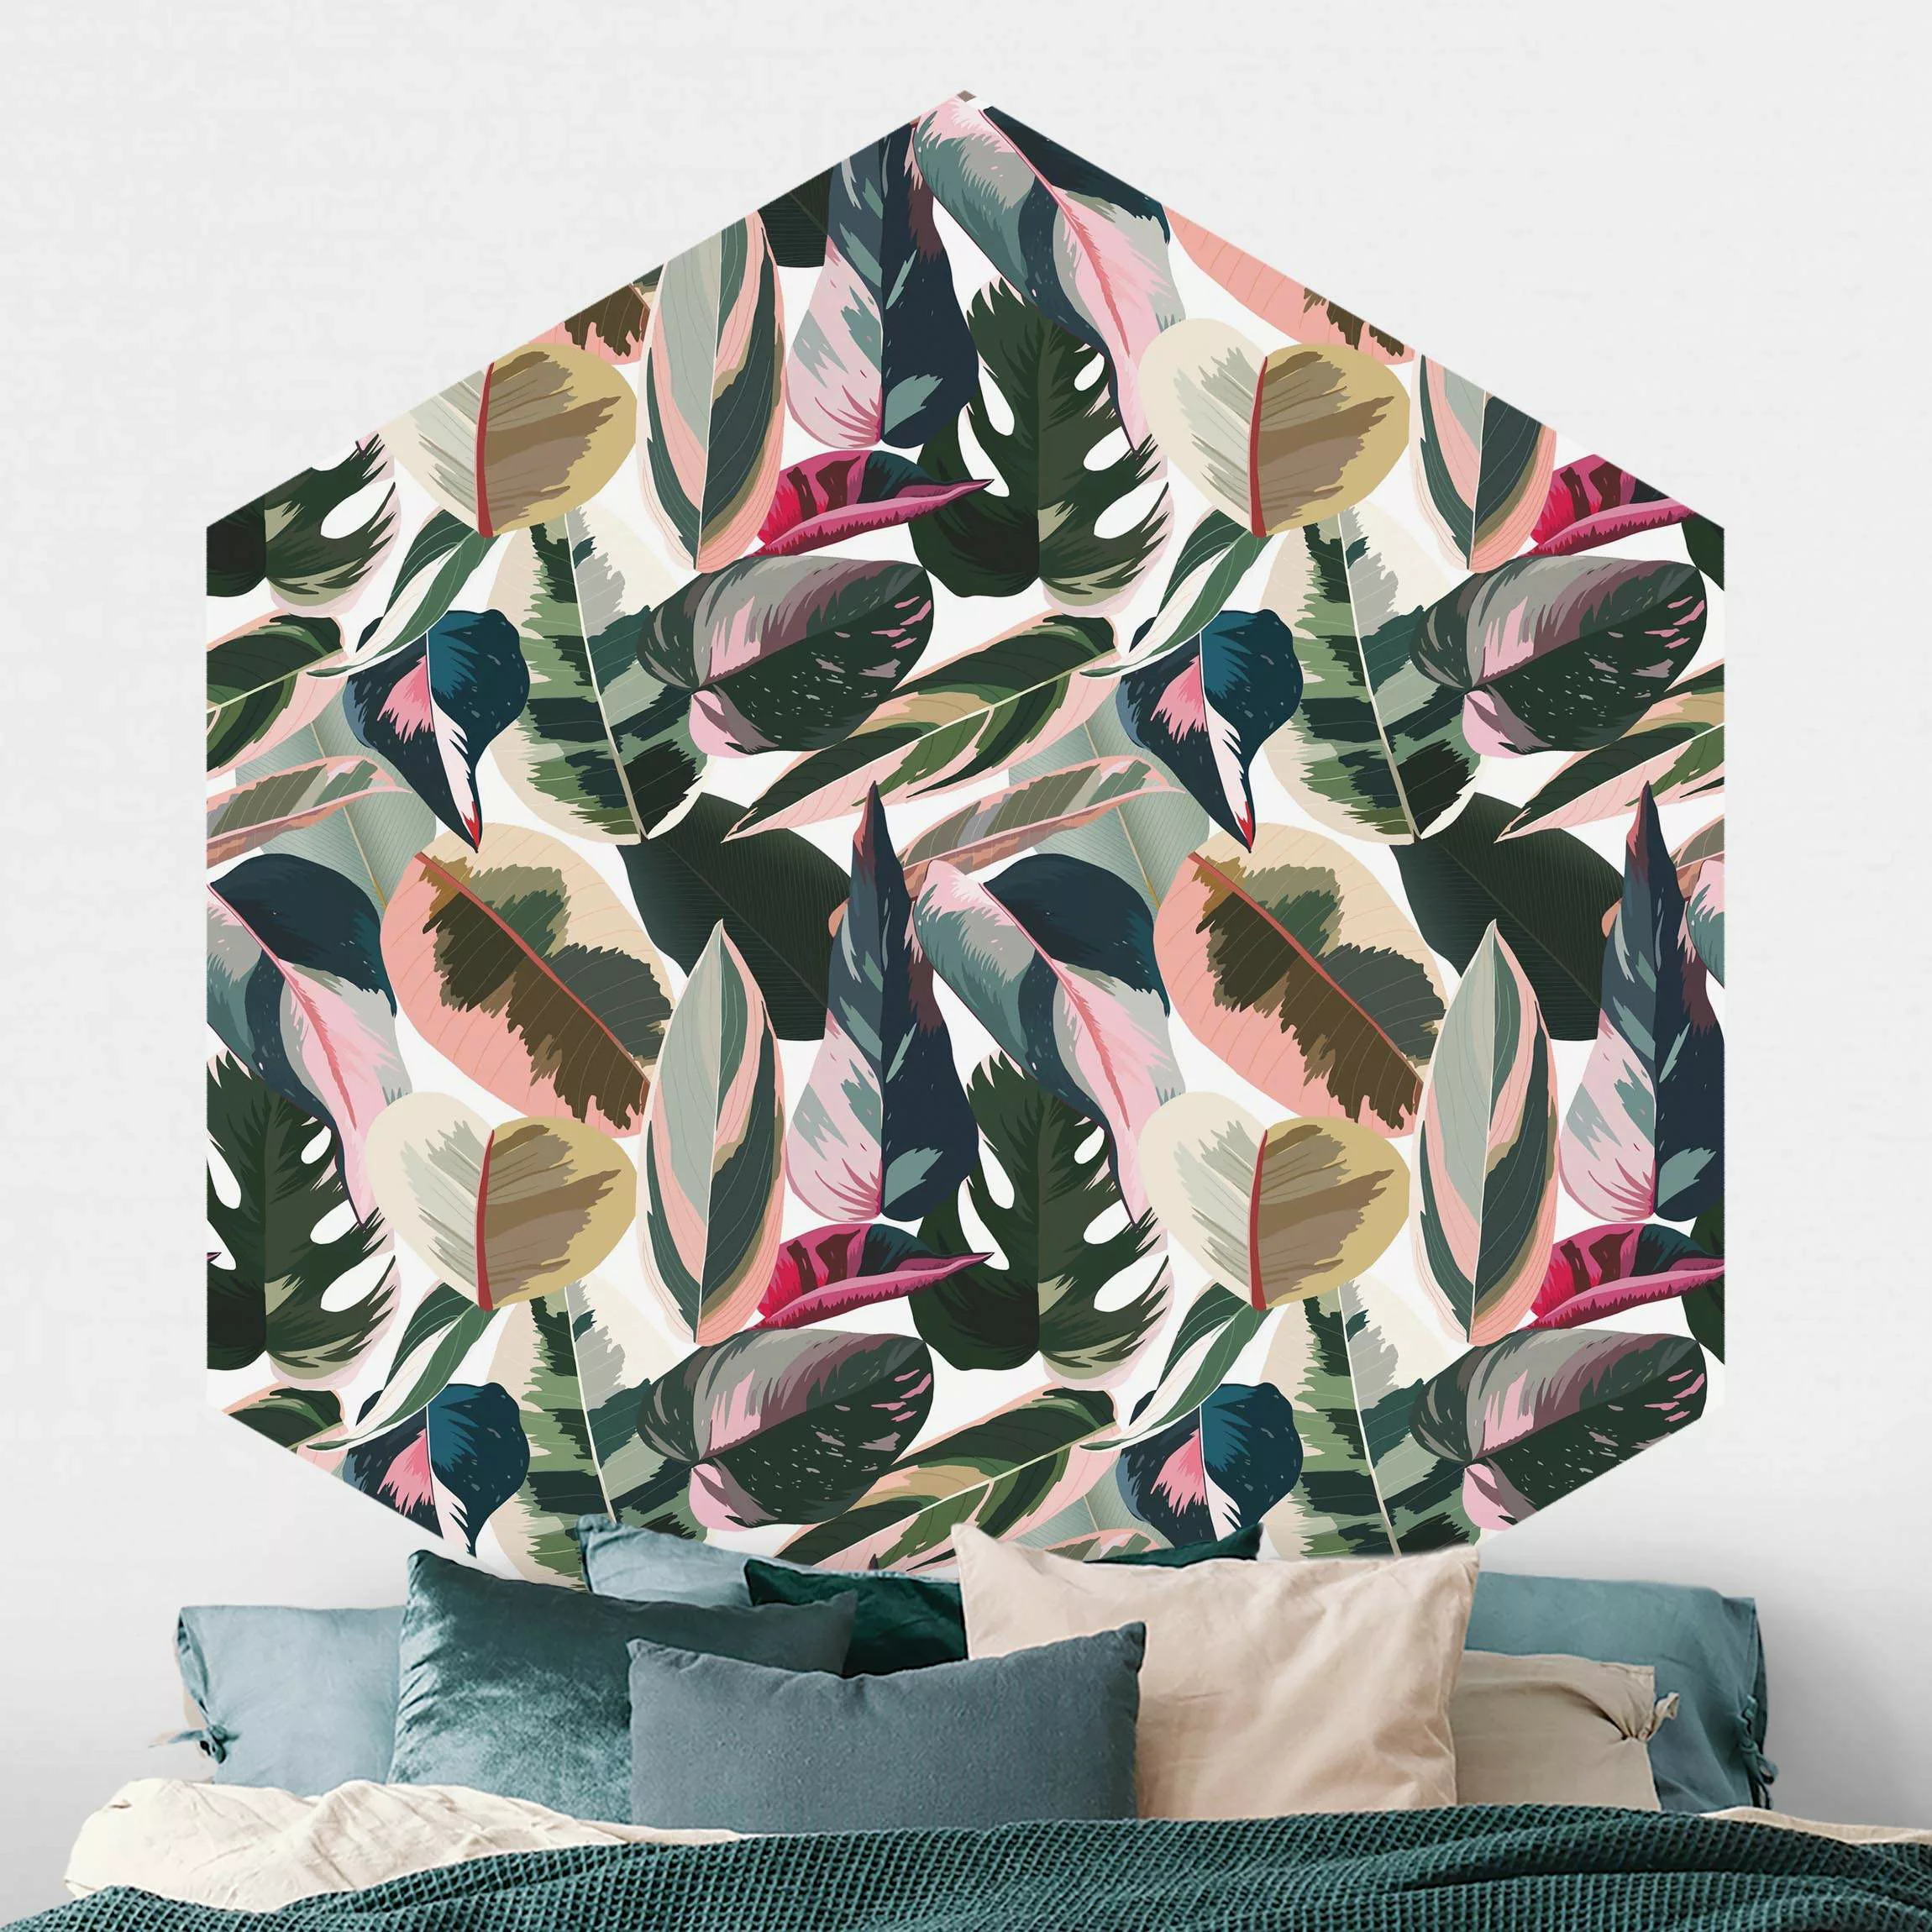 Hexagon Mustertapete selbstklebend Pinke Tropen Muster günstig online kaufen